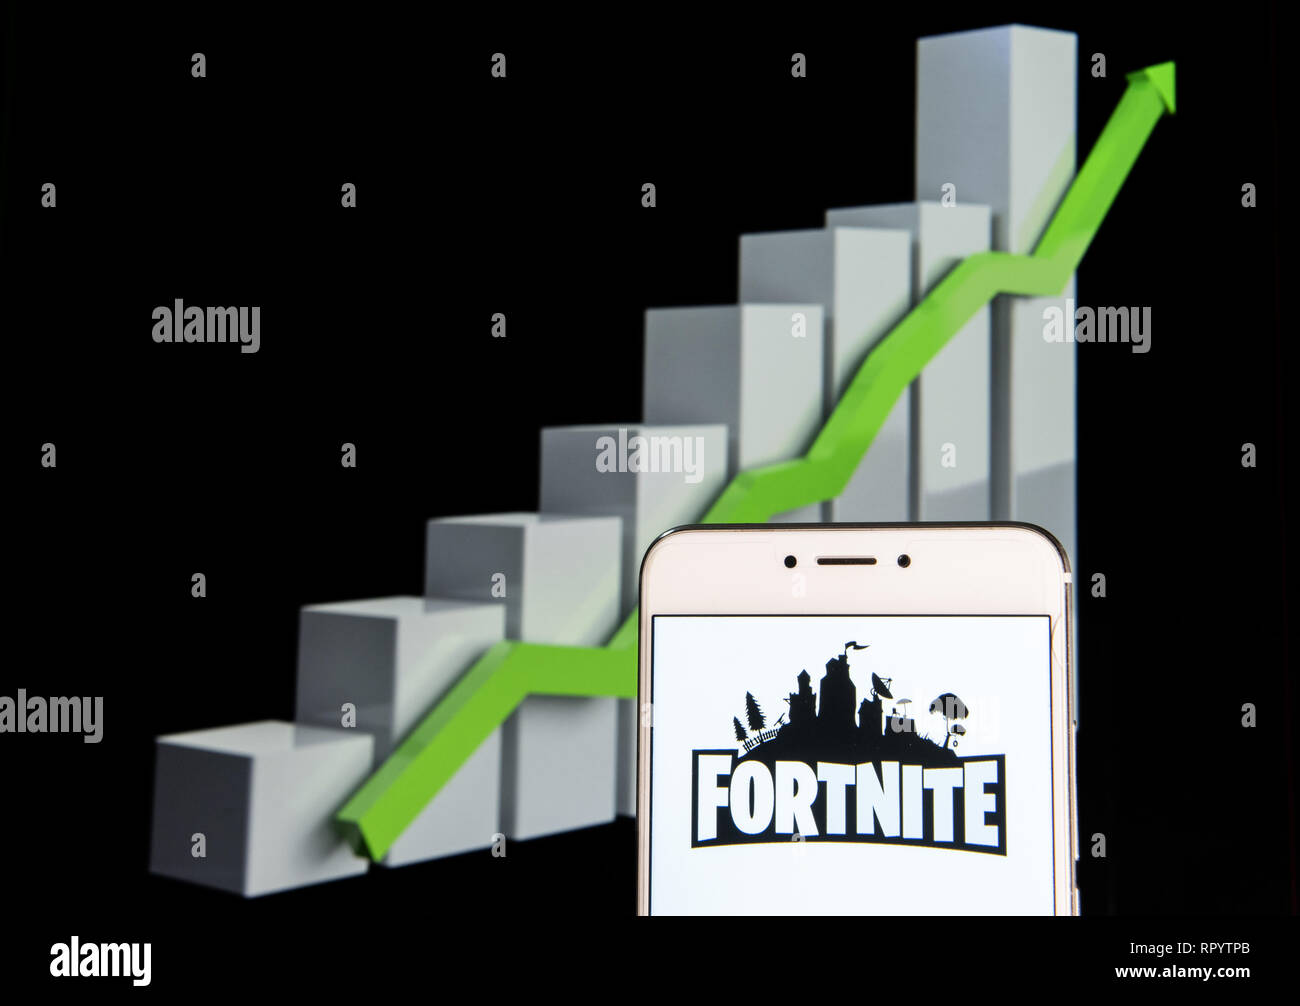 Fortnite Stock Chart